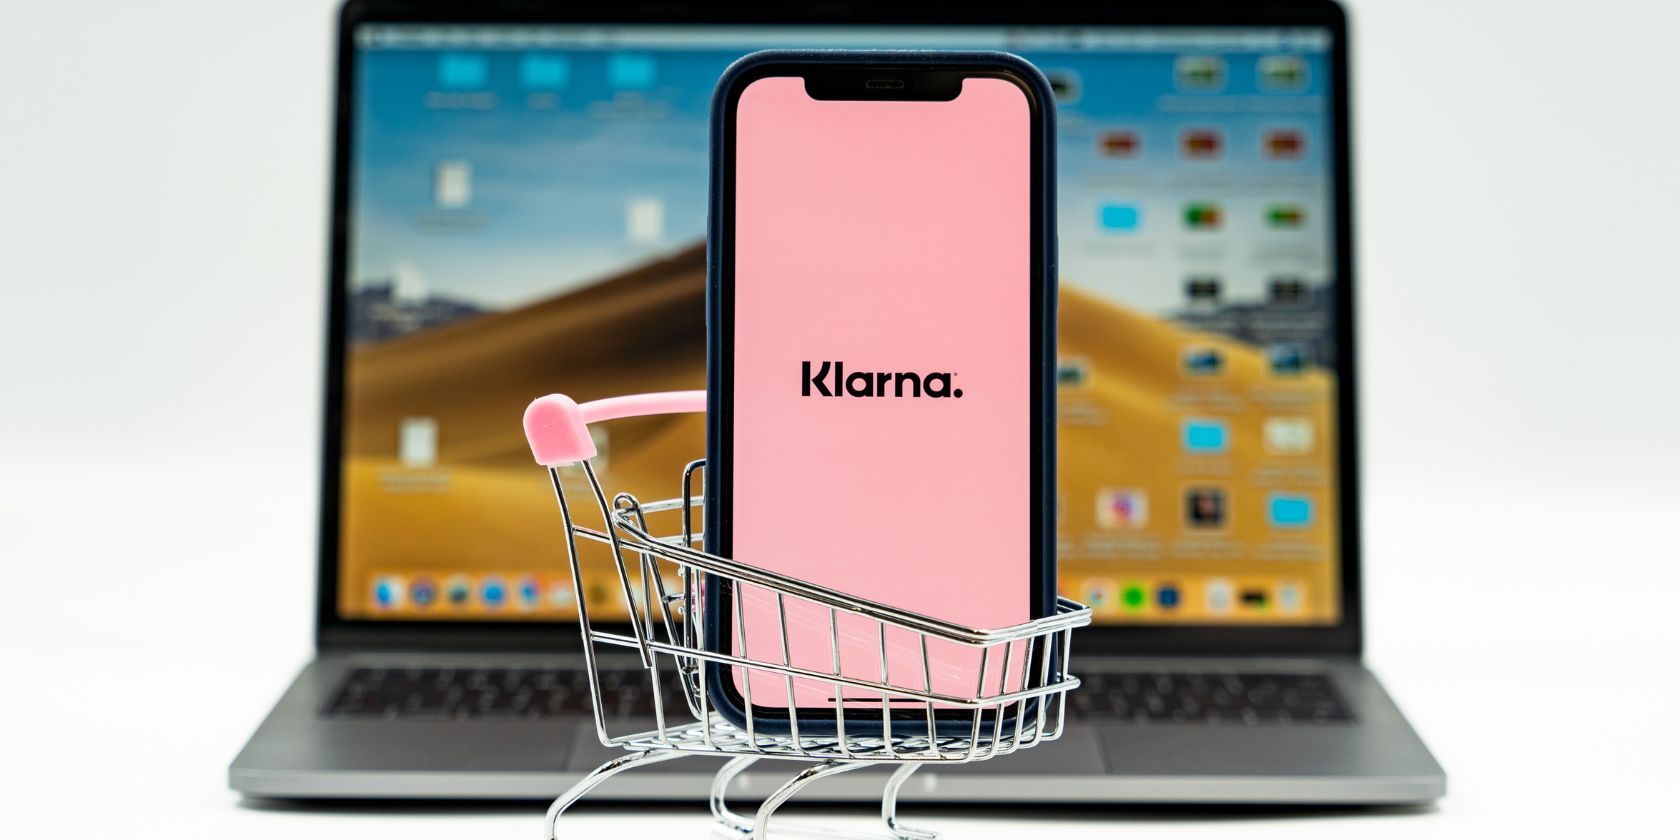 klarna app on smartphone in miniature trolley in front of macbook